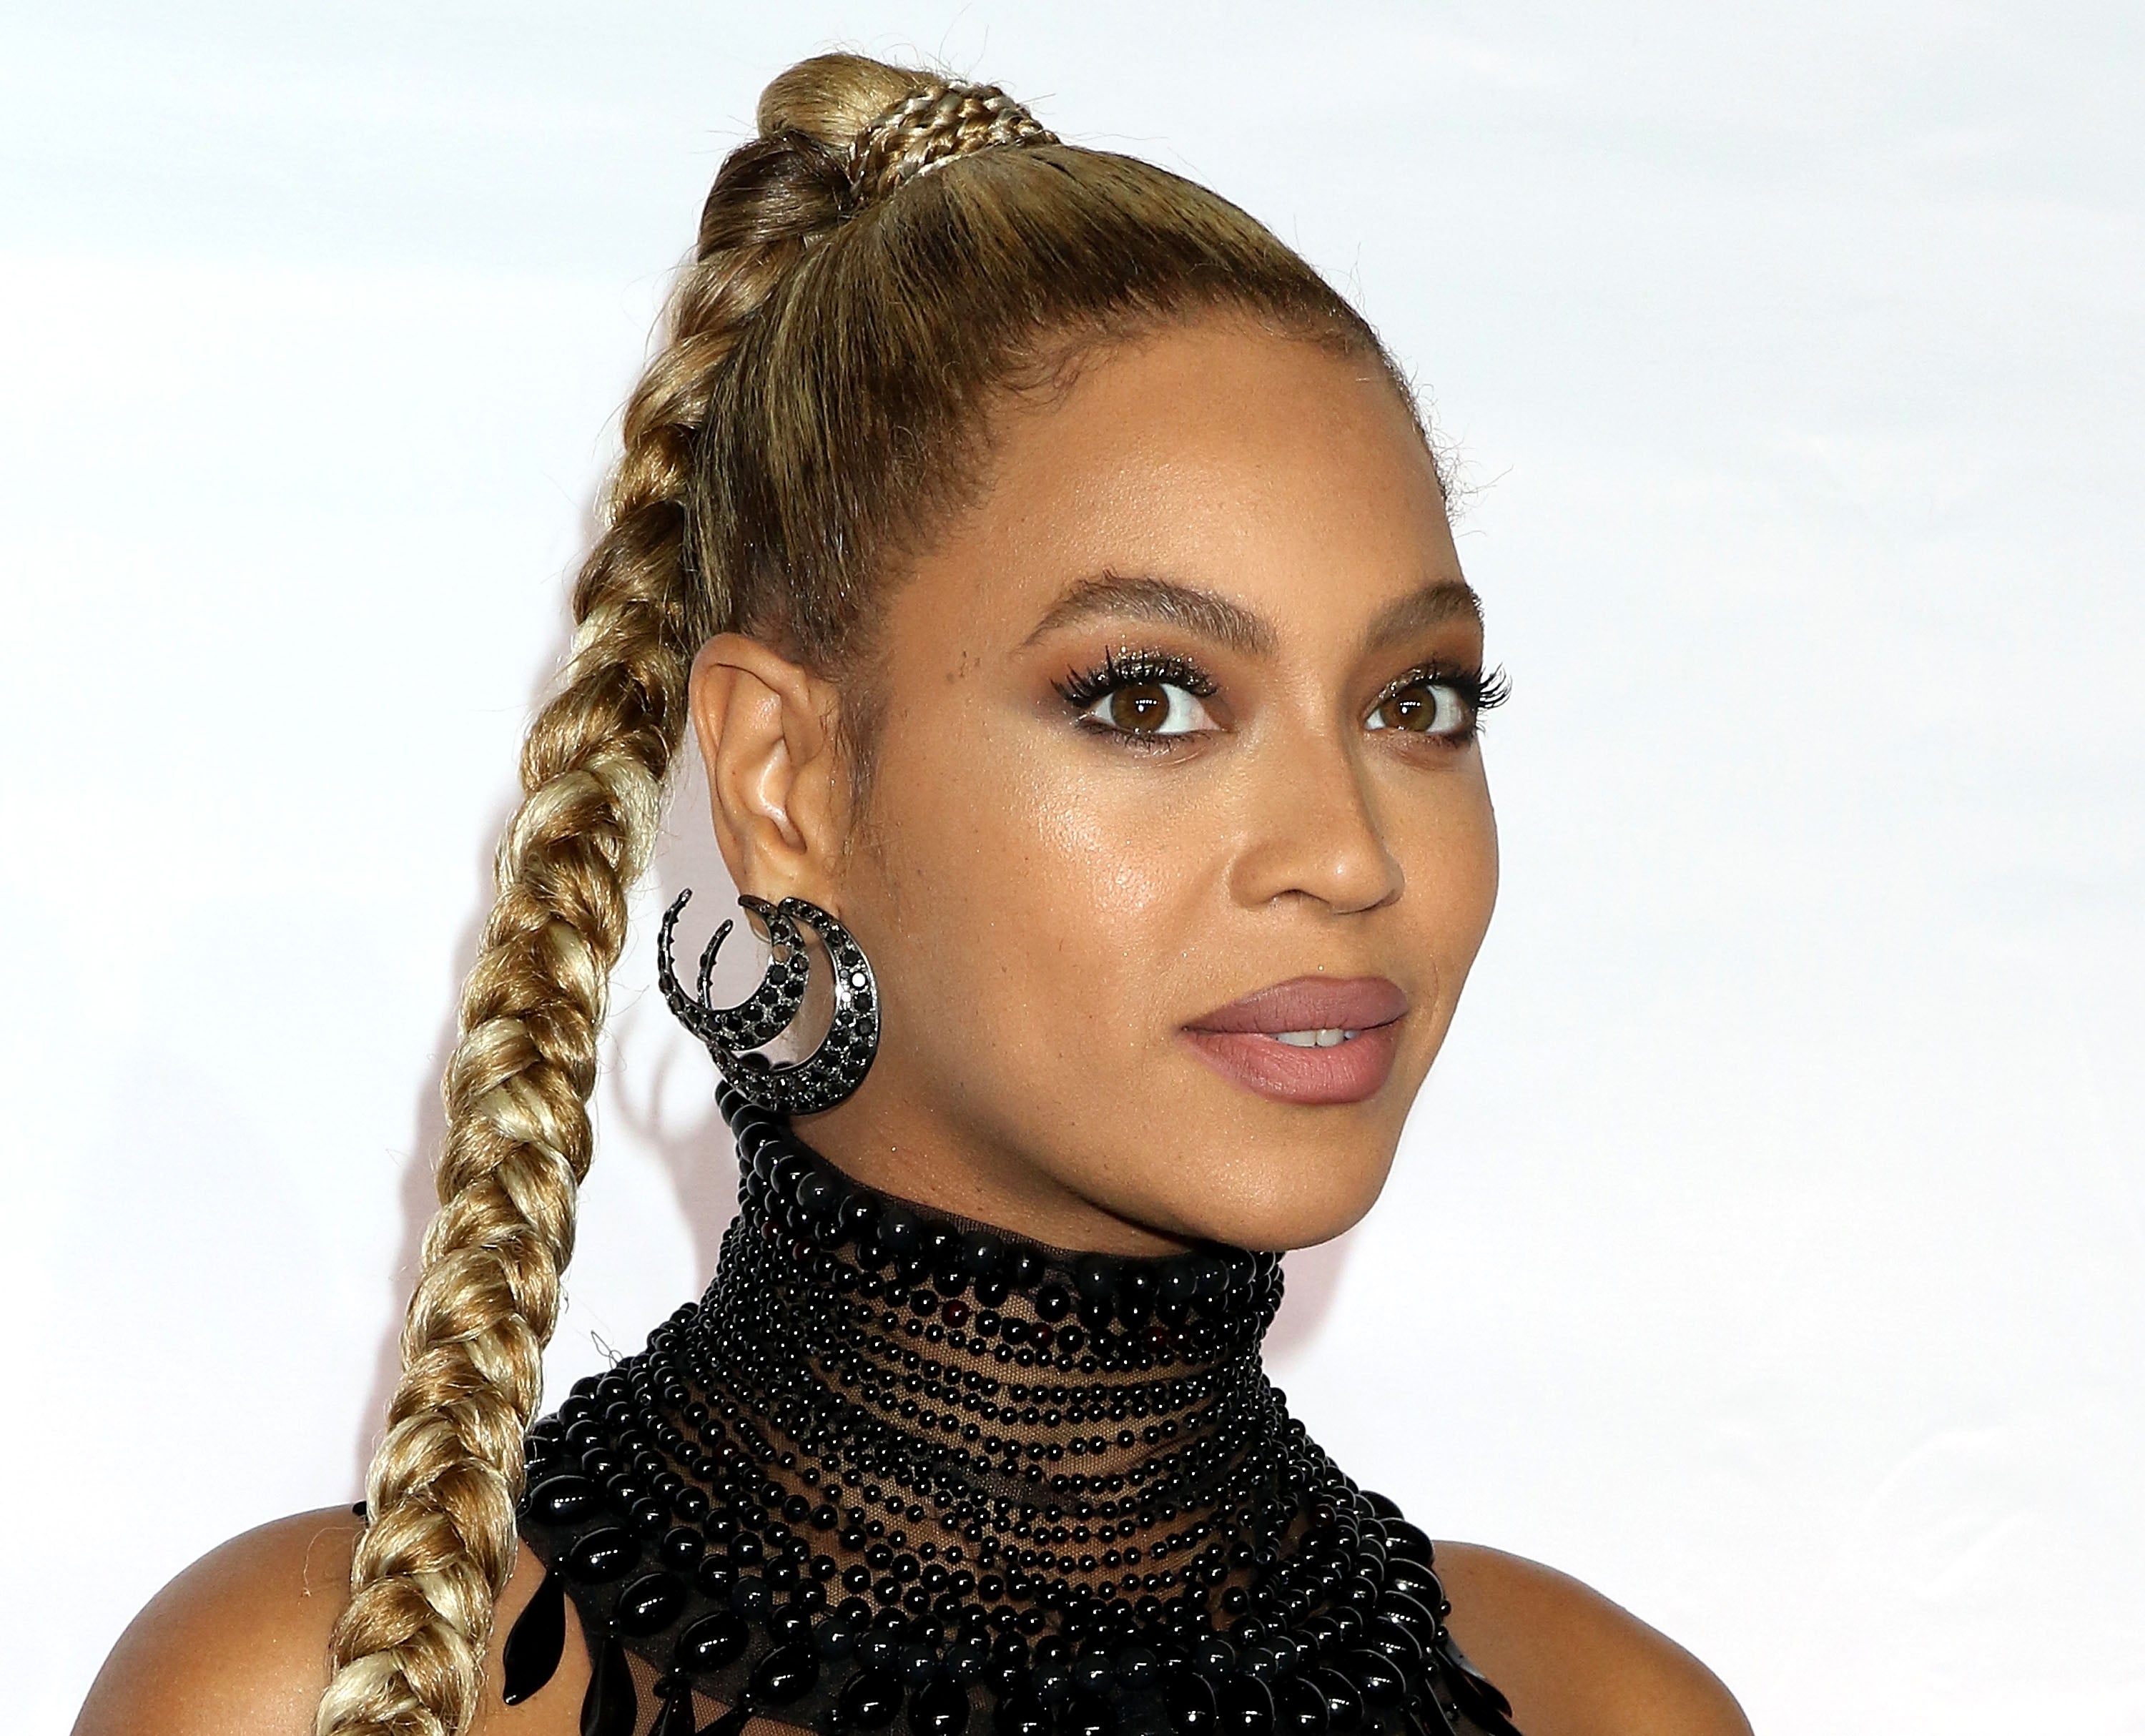 9 Must See Photos Of Beyoncé 's Epic Braid At Tidal x 1015
